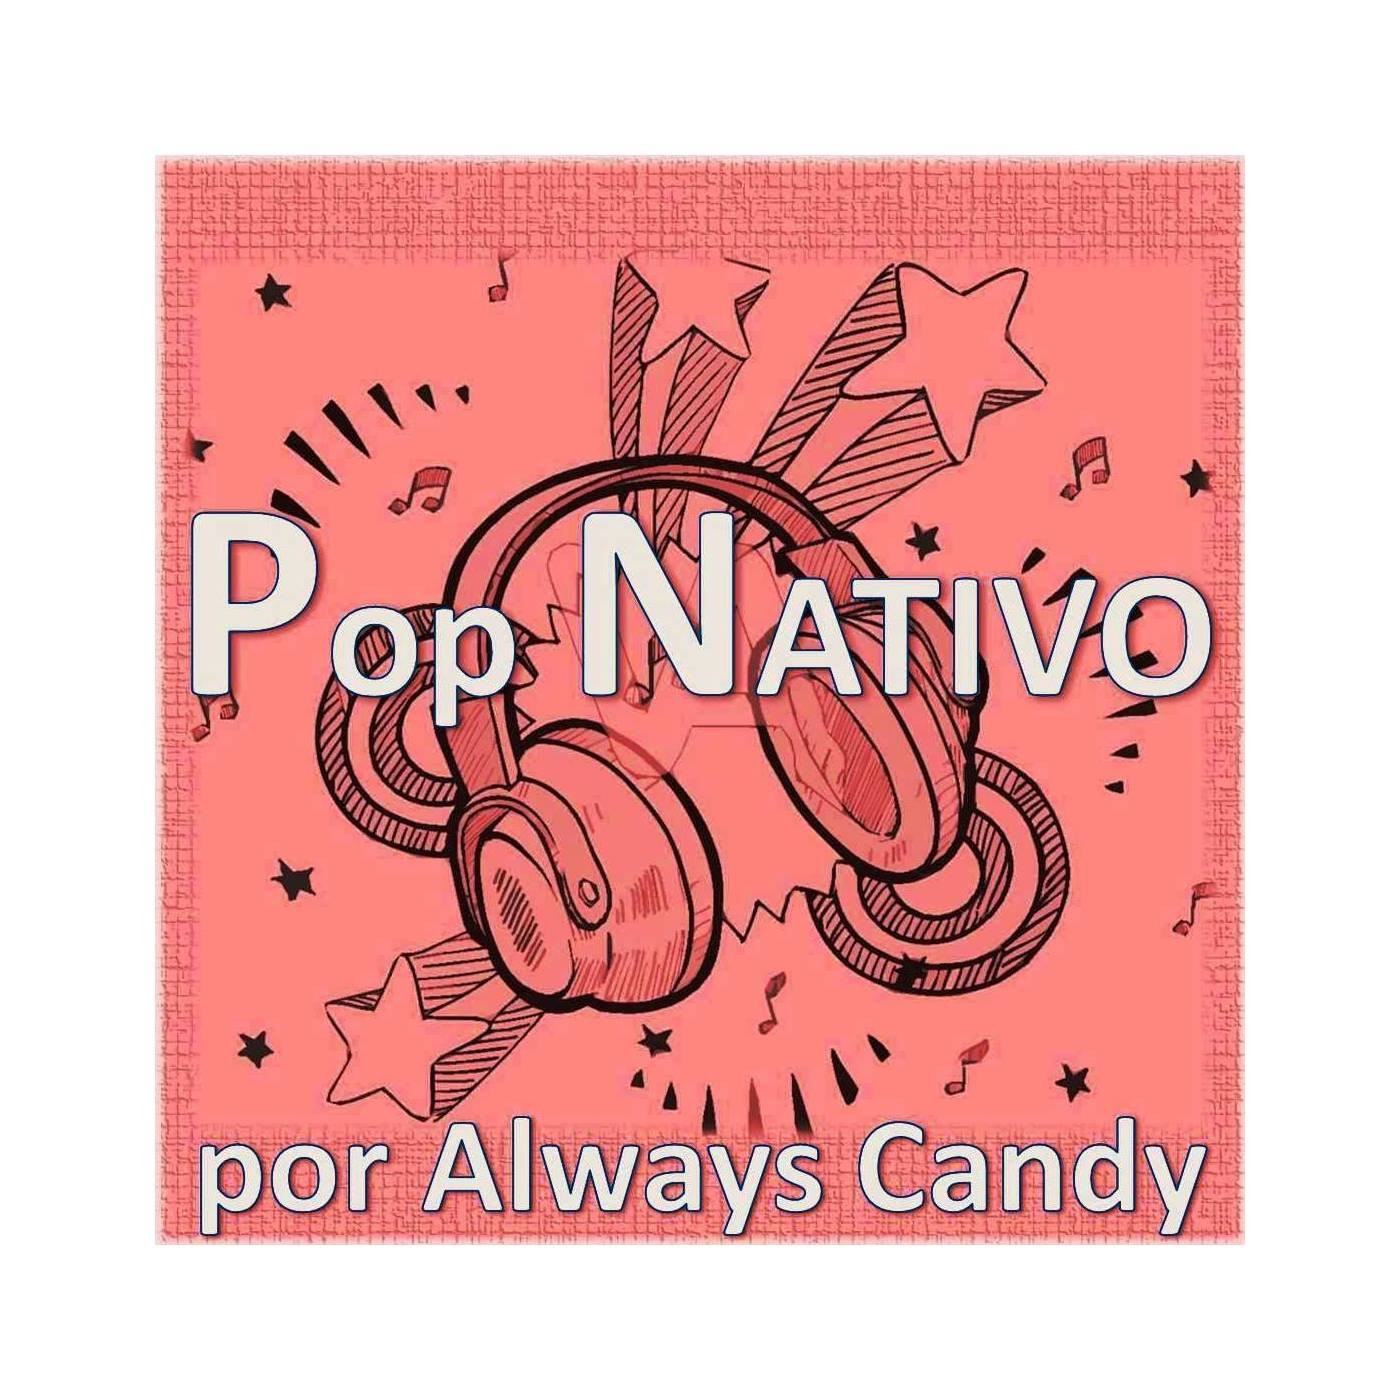 Podcast Pop Nativo